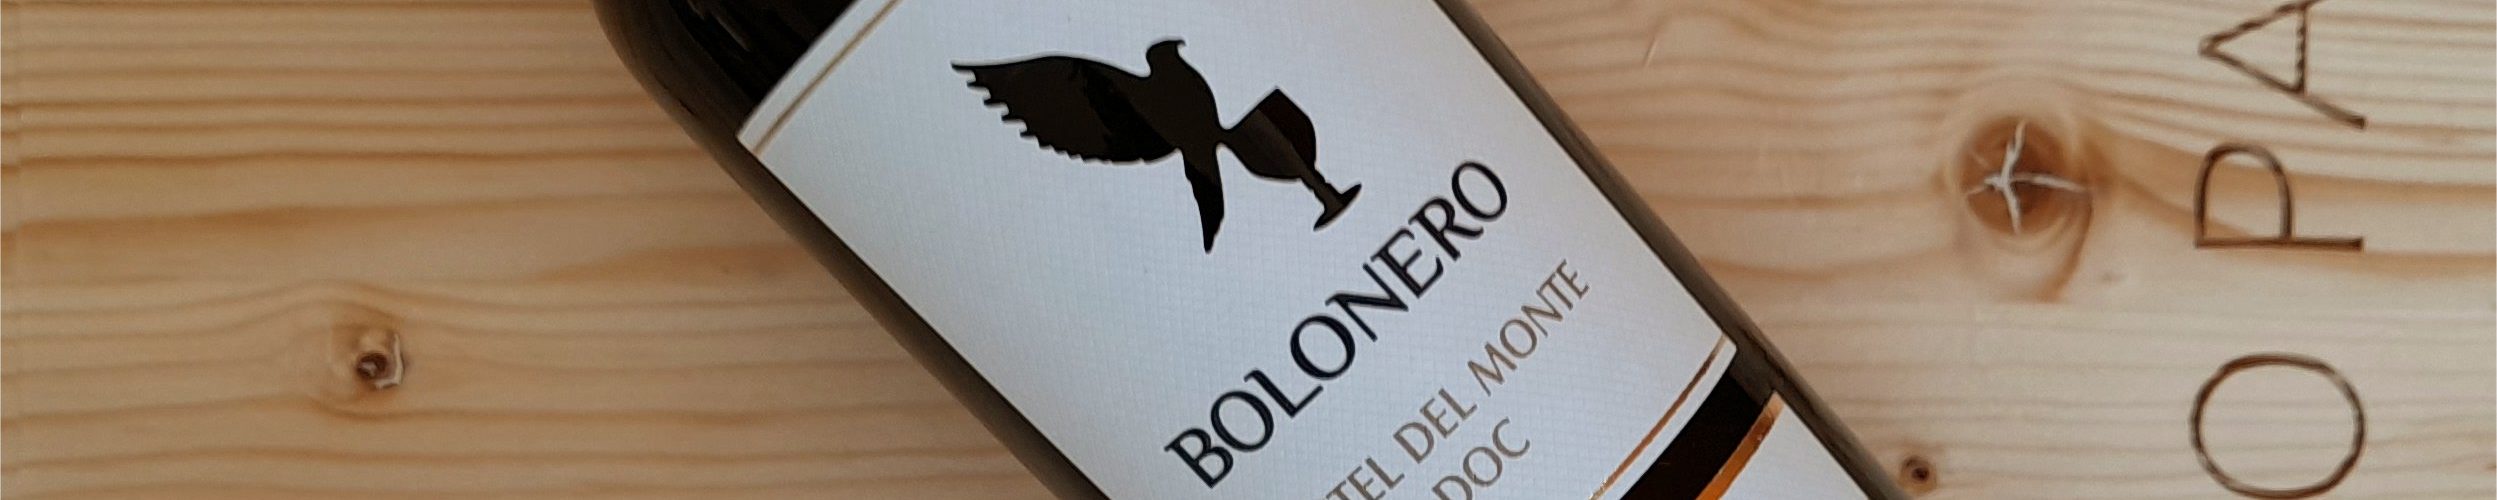 Bolonero 2019 - Torrevento